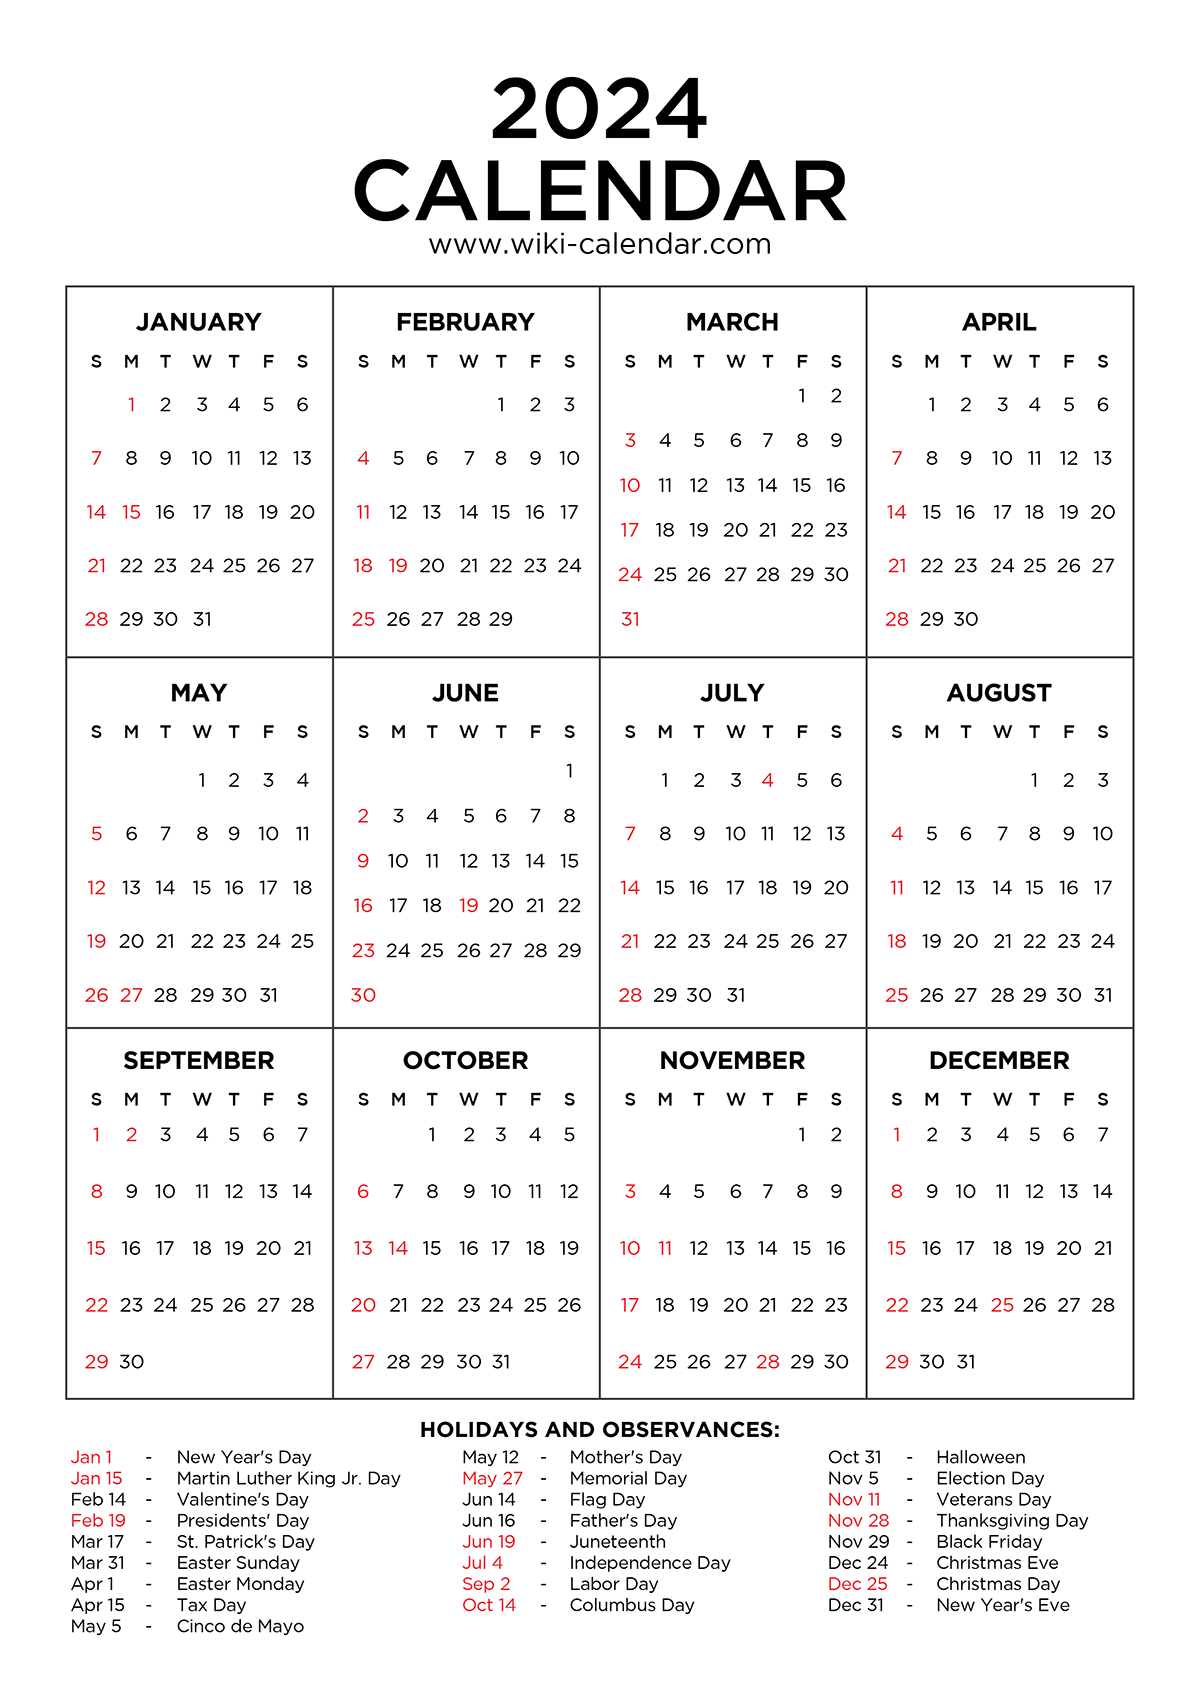 Year 2024 Calendar Printable With Holidays - Wiki Calendar | Free To Print Calendar 2024